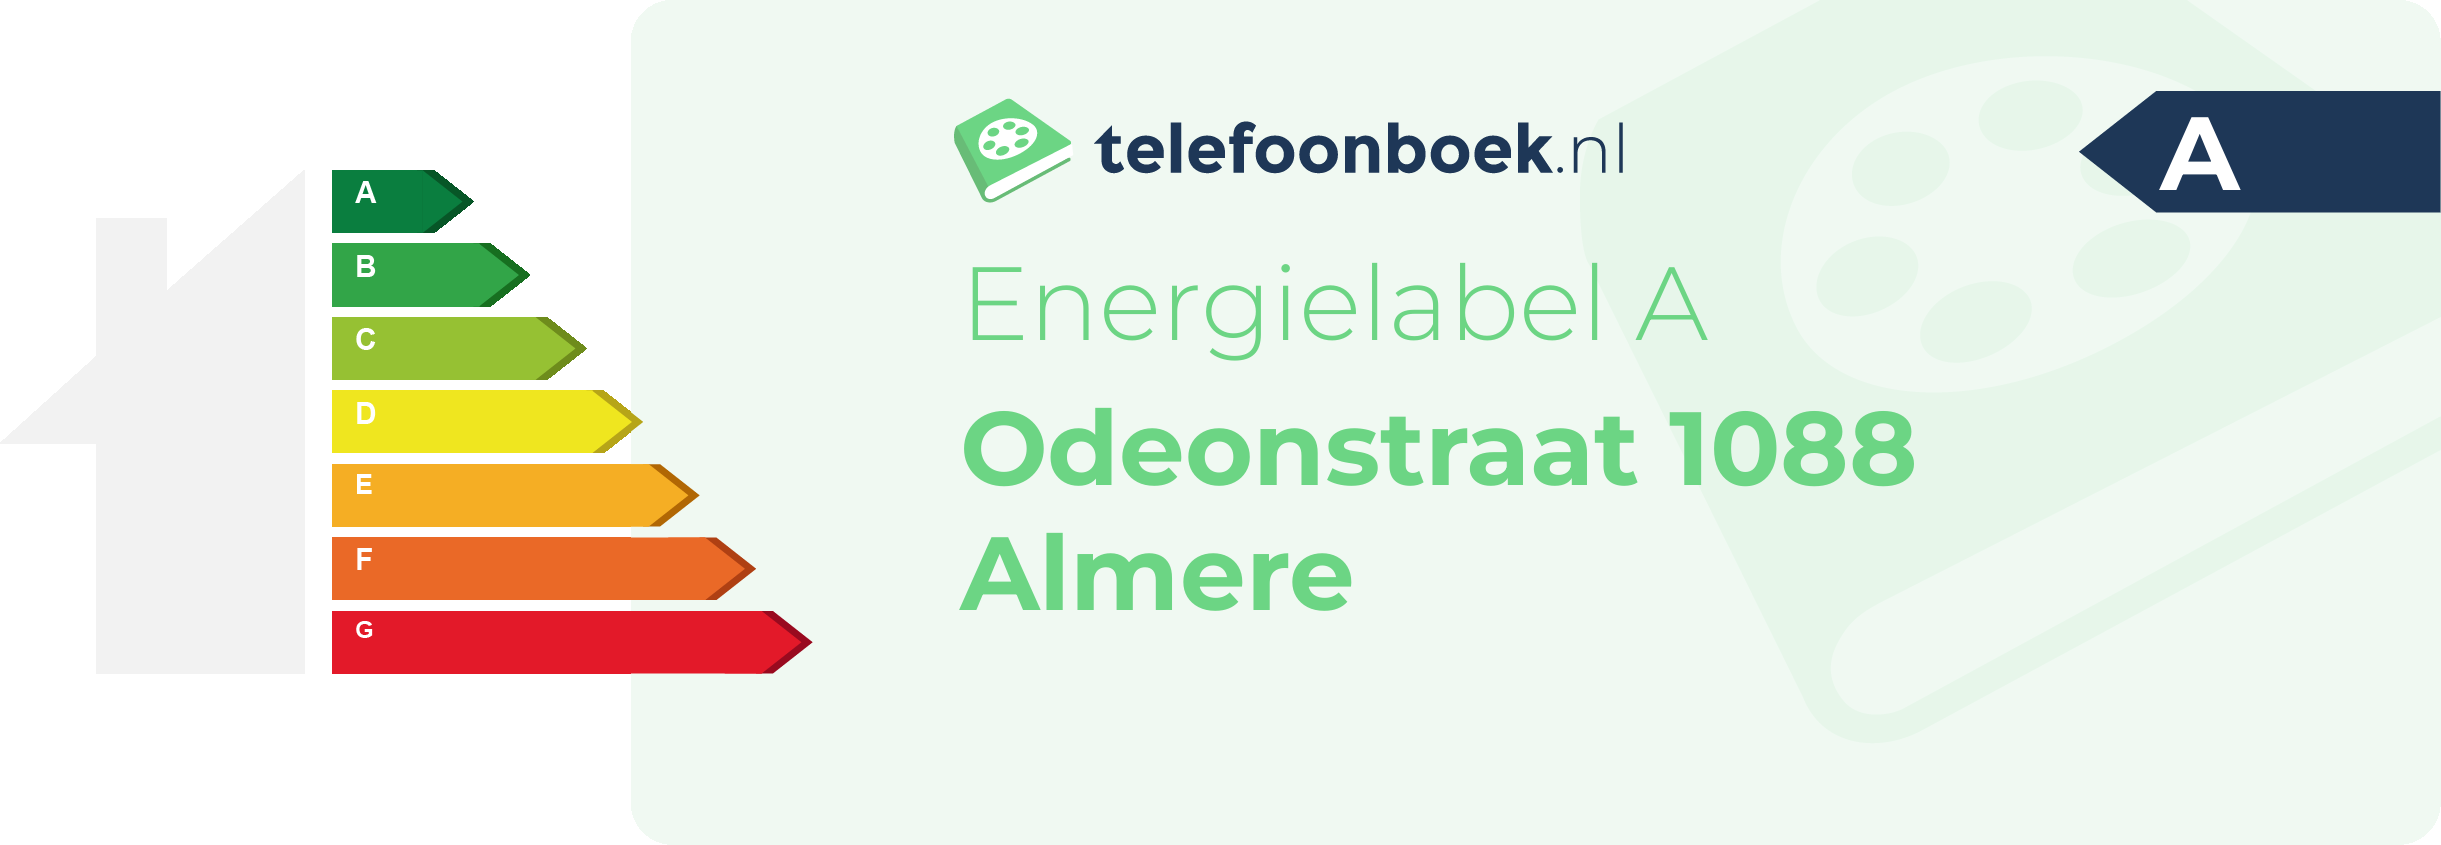 Energielabel Odeonstraat 1088 Almere